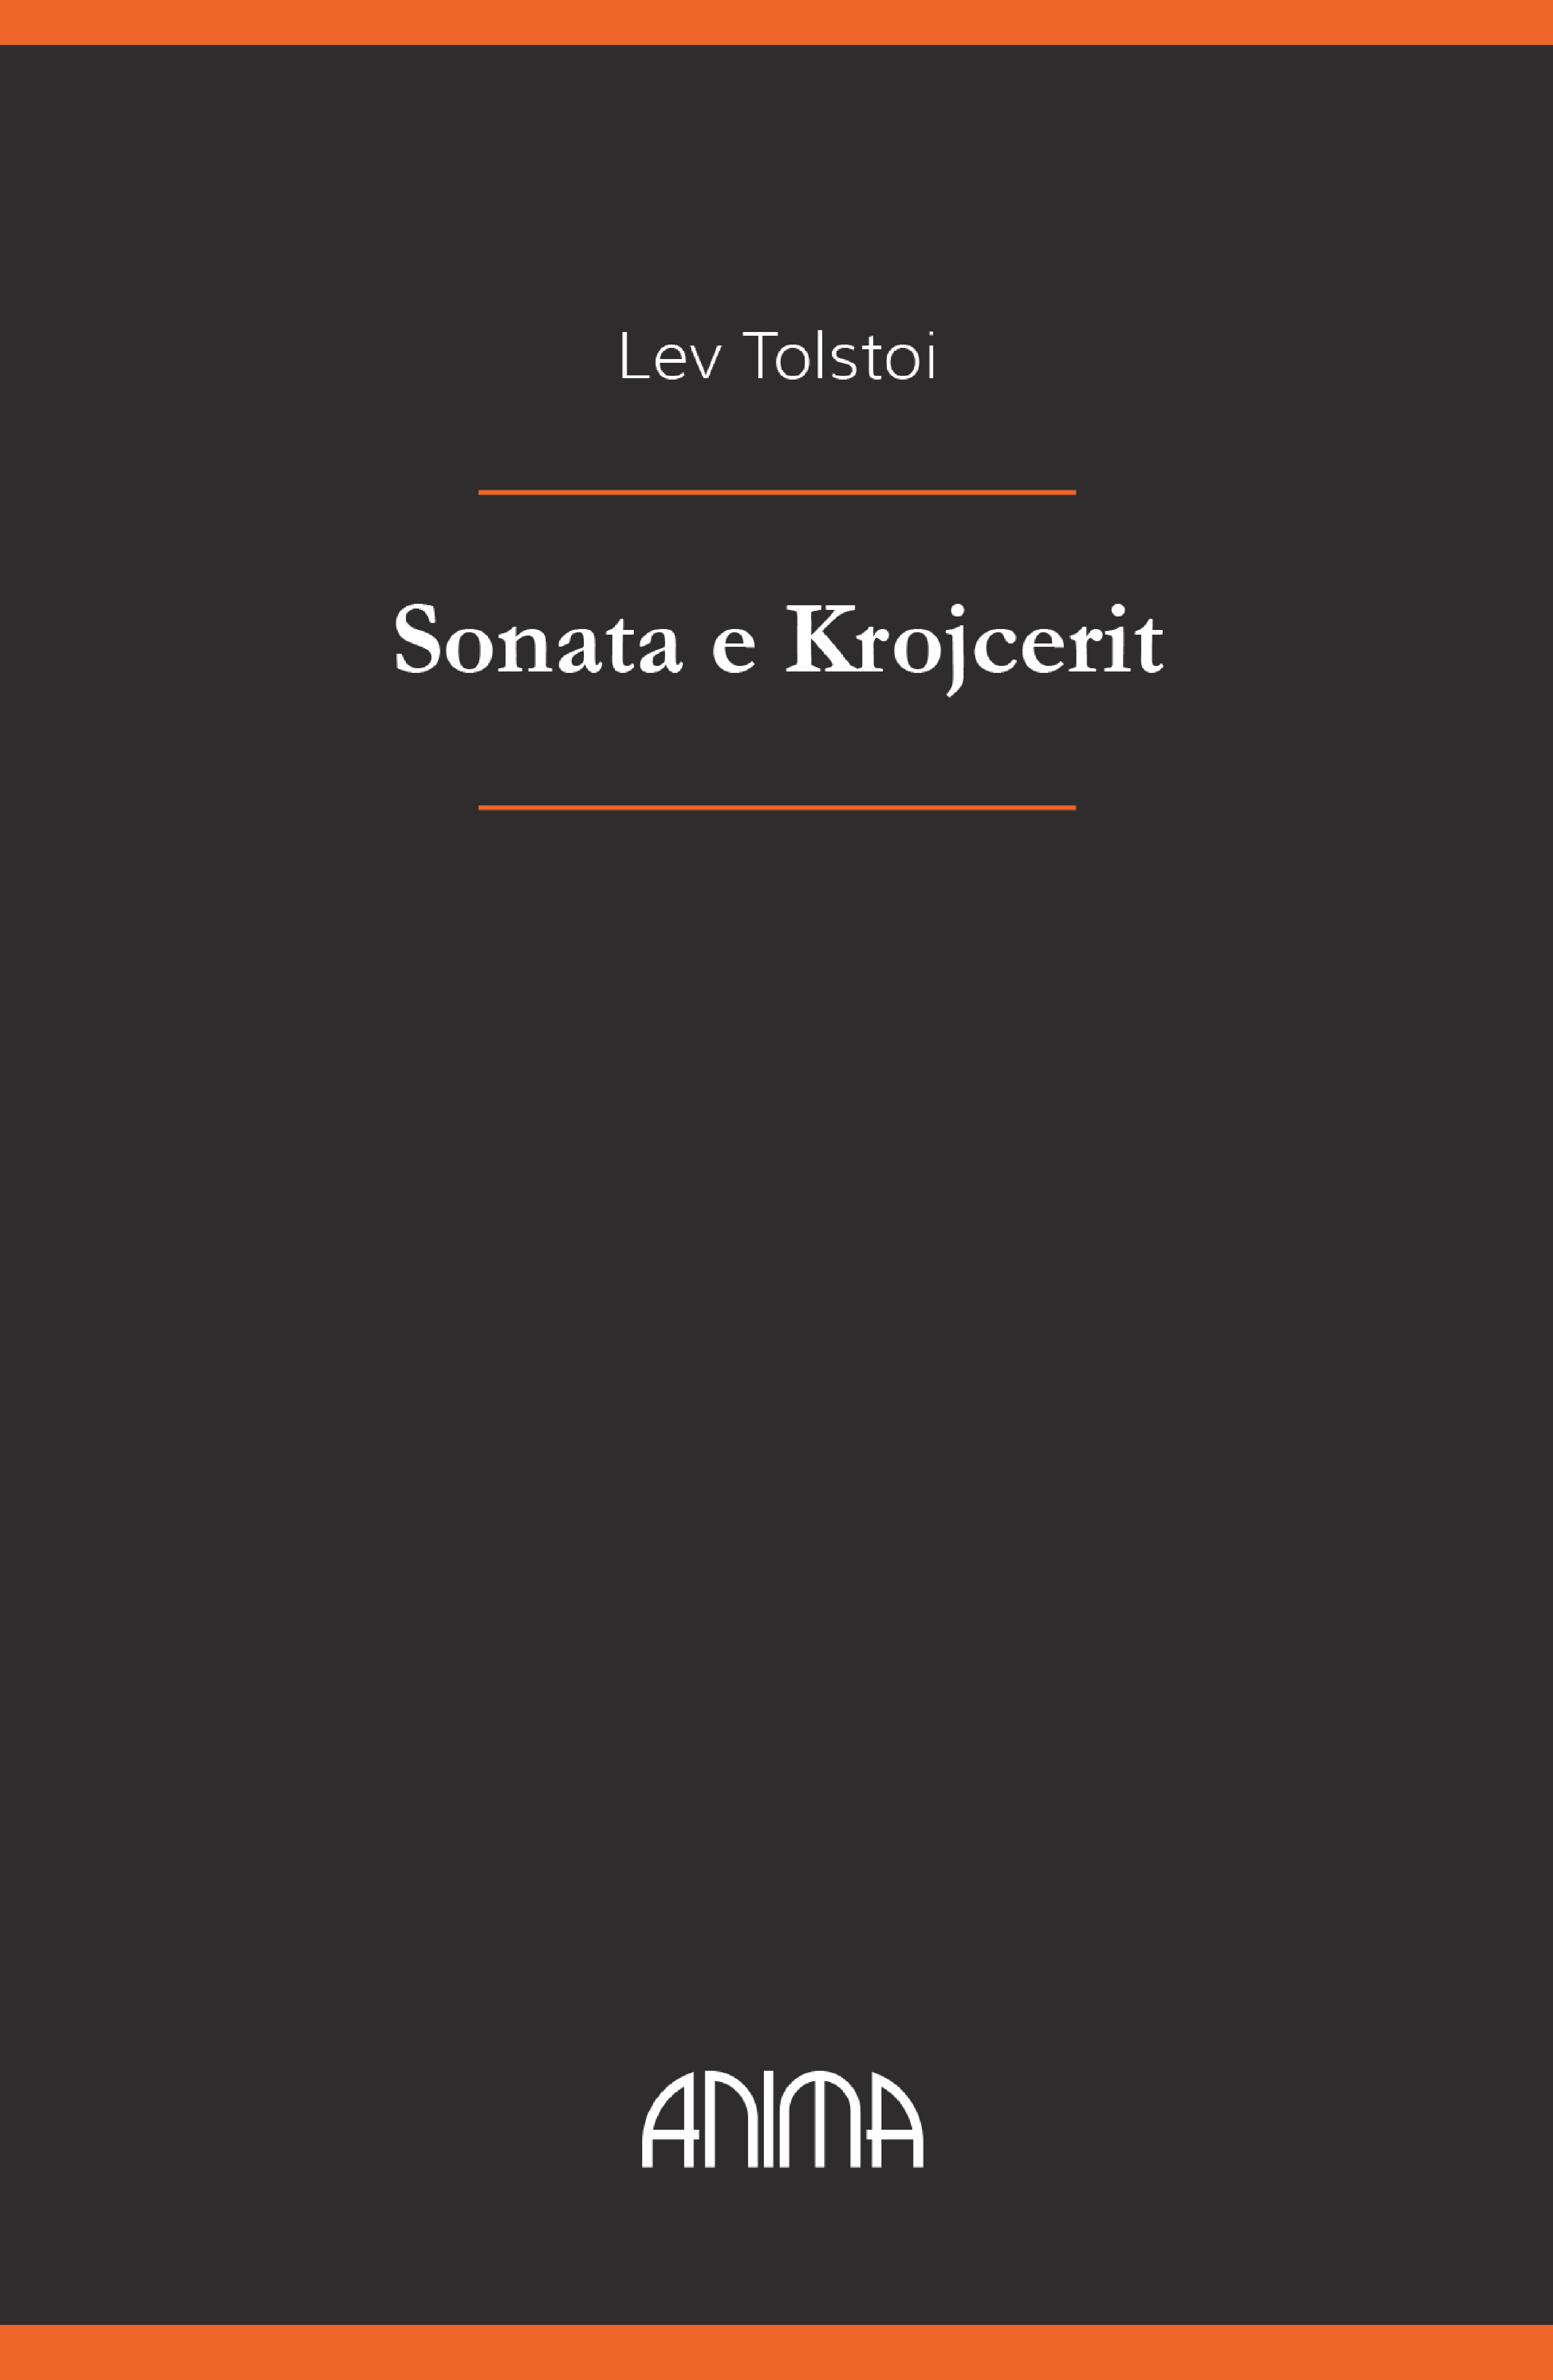 Sonata e Krojcerit